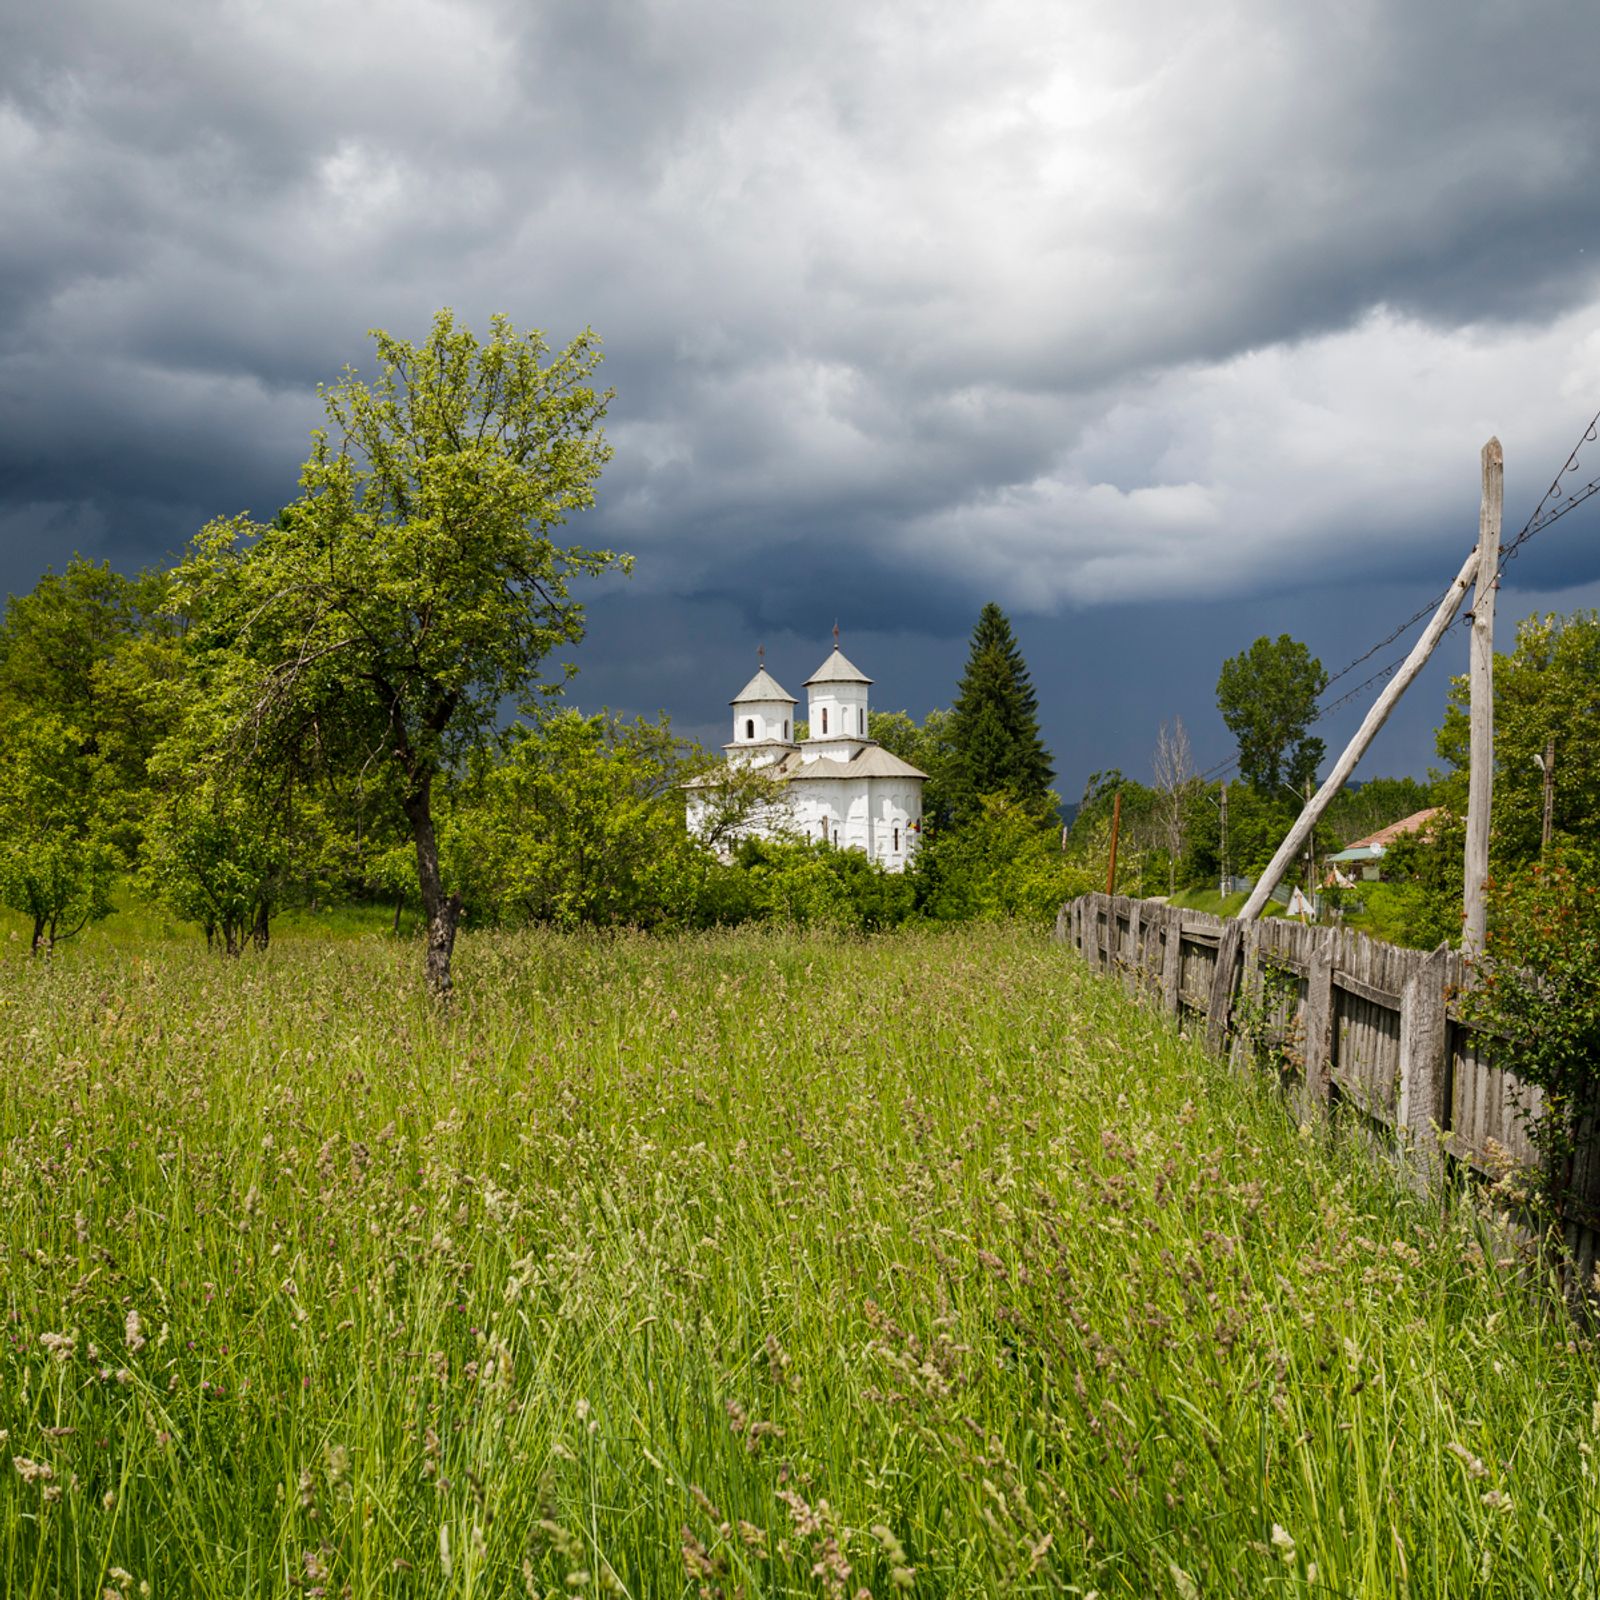 © Johanna Maria Fritz - A church in the countryside. Romania, 2019.